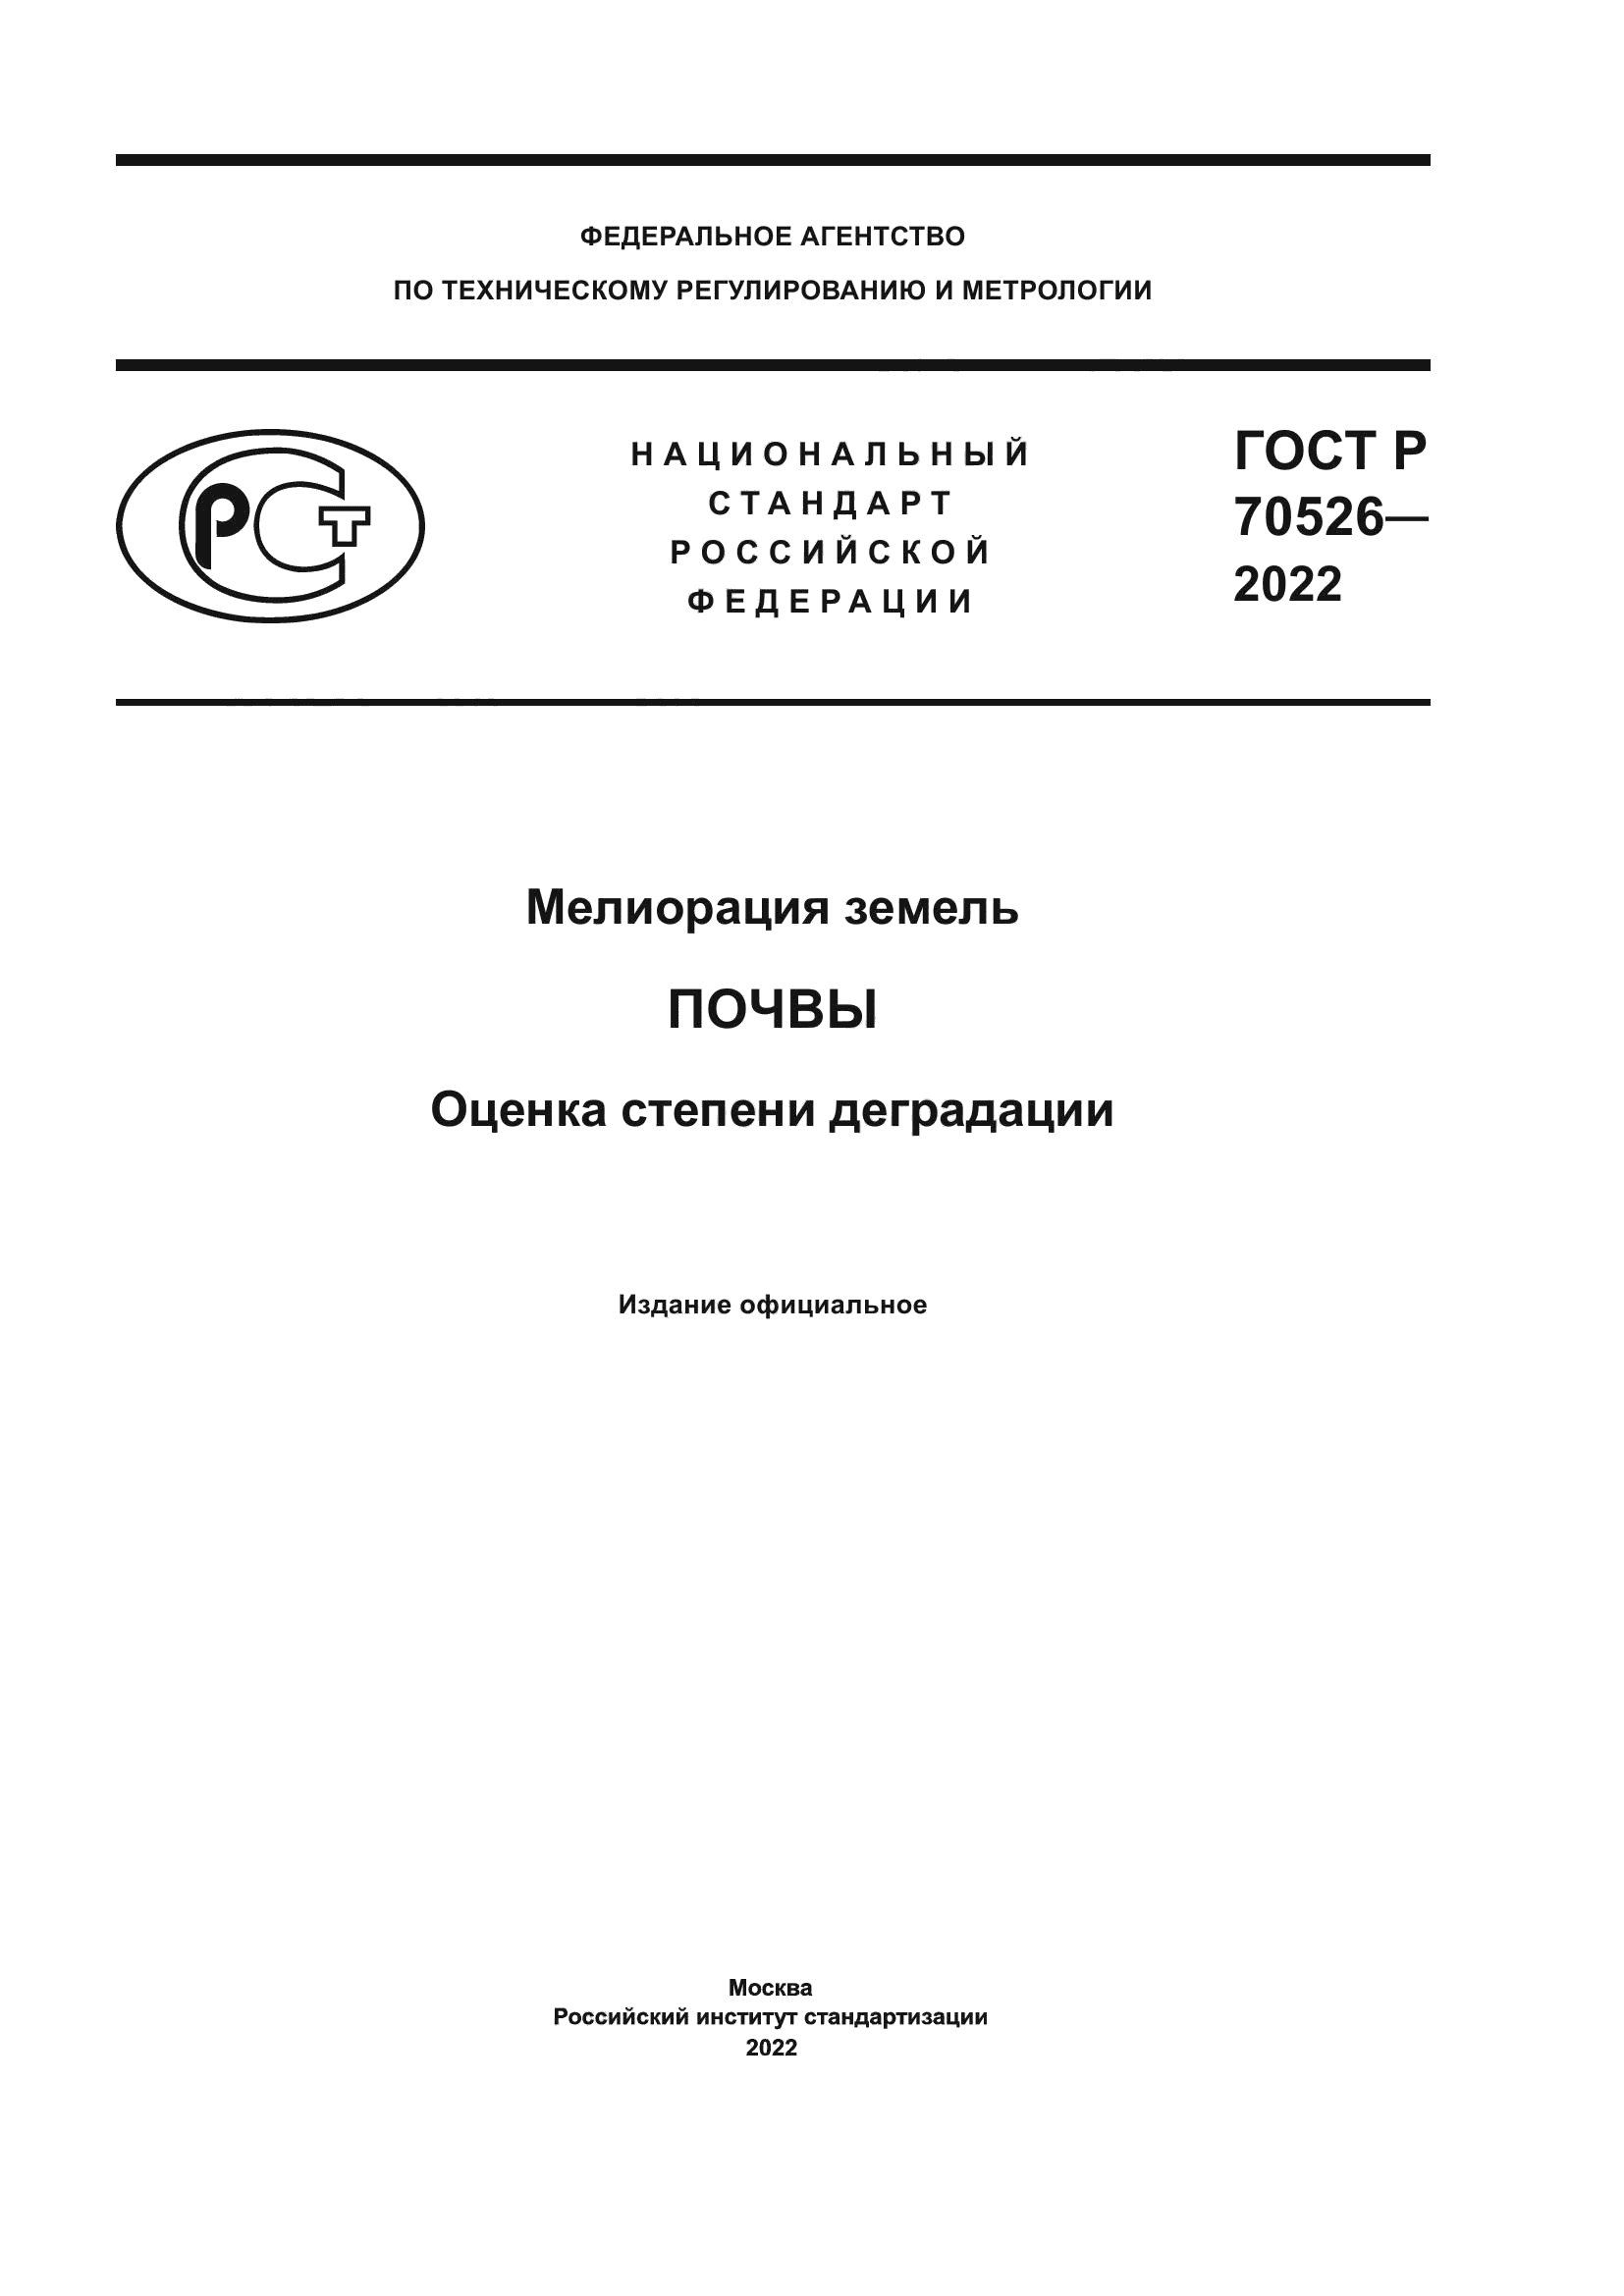 ГОСТ Р 70526-2022